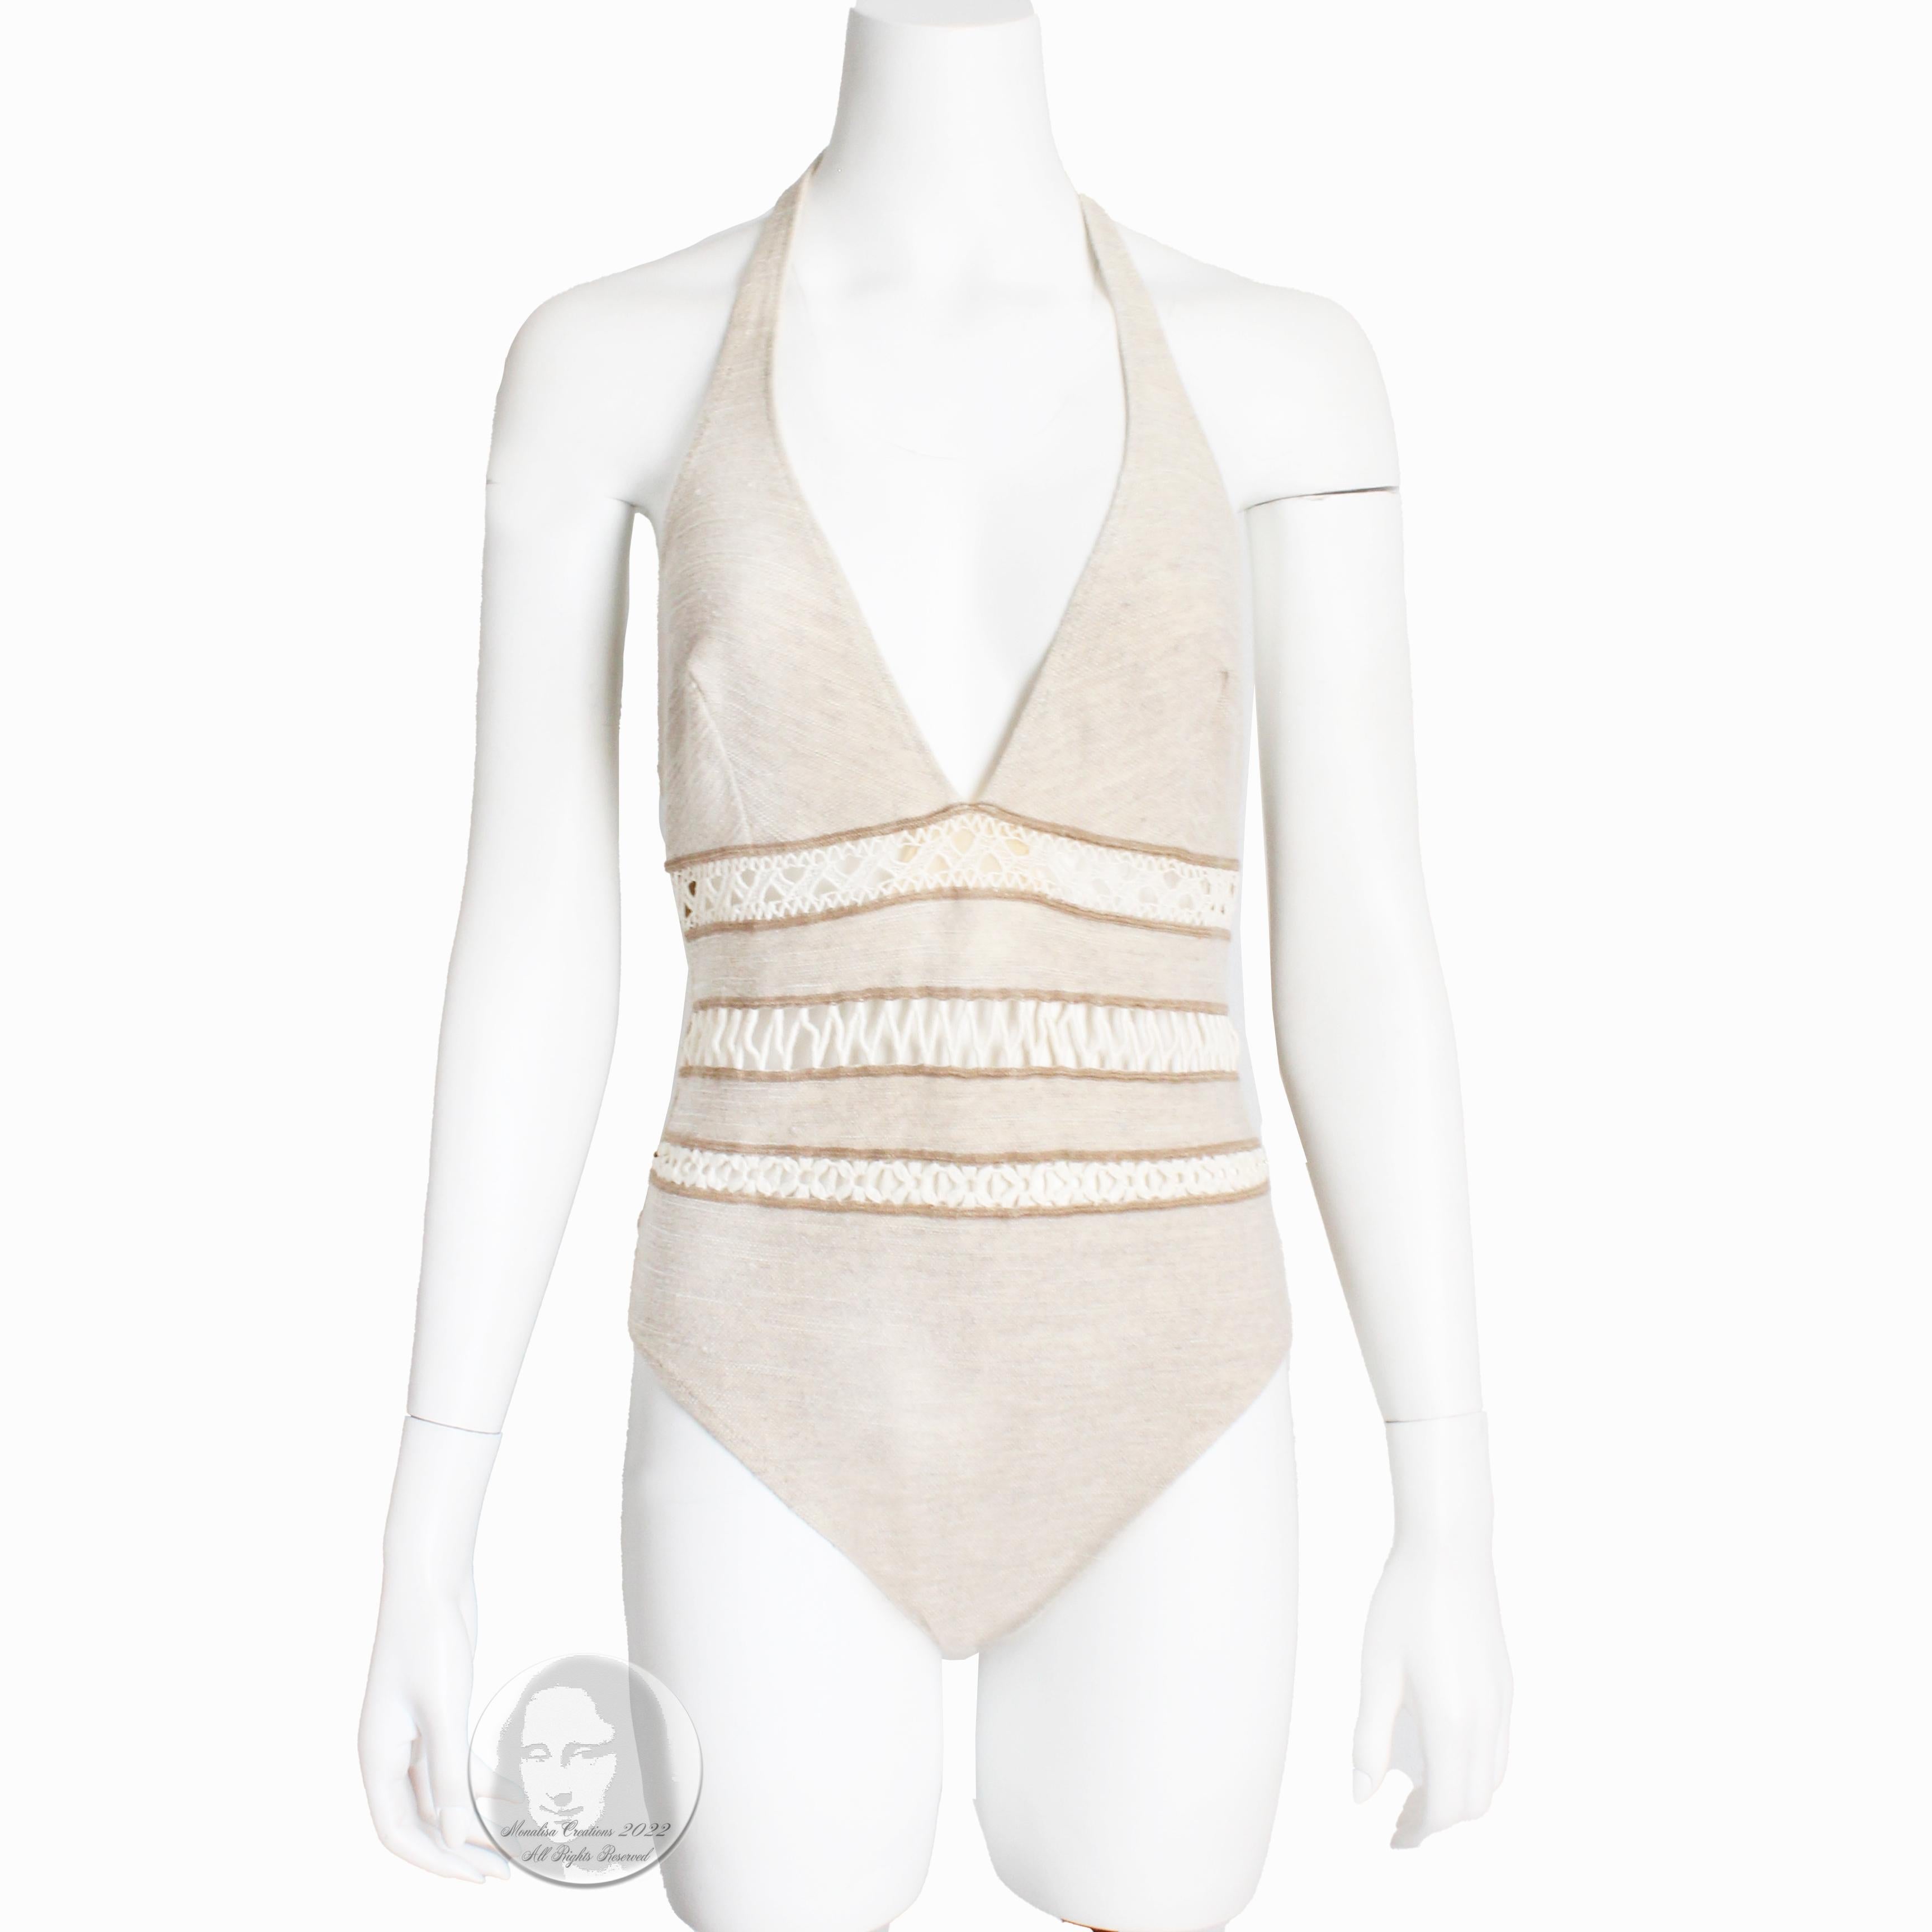 La Perla Bodysuit Swimsuit Halter Linen Macrame Size 48 For Sale 1